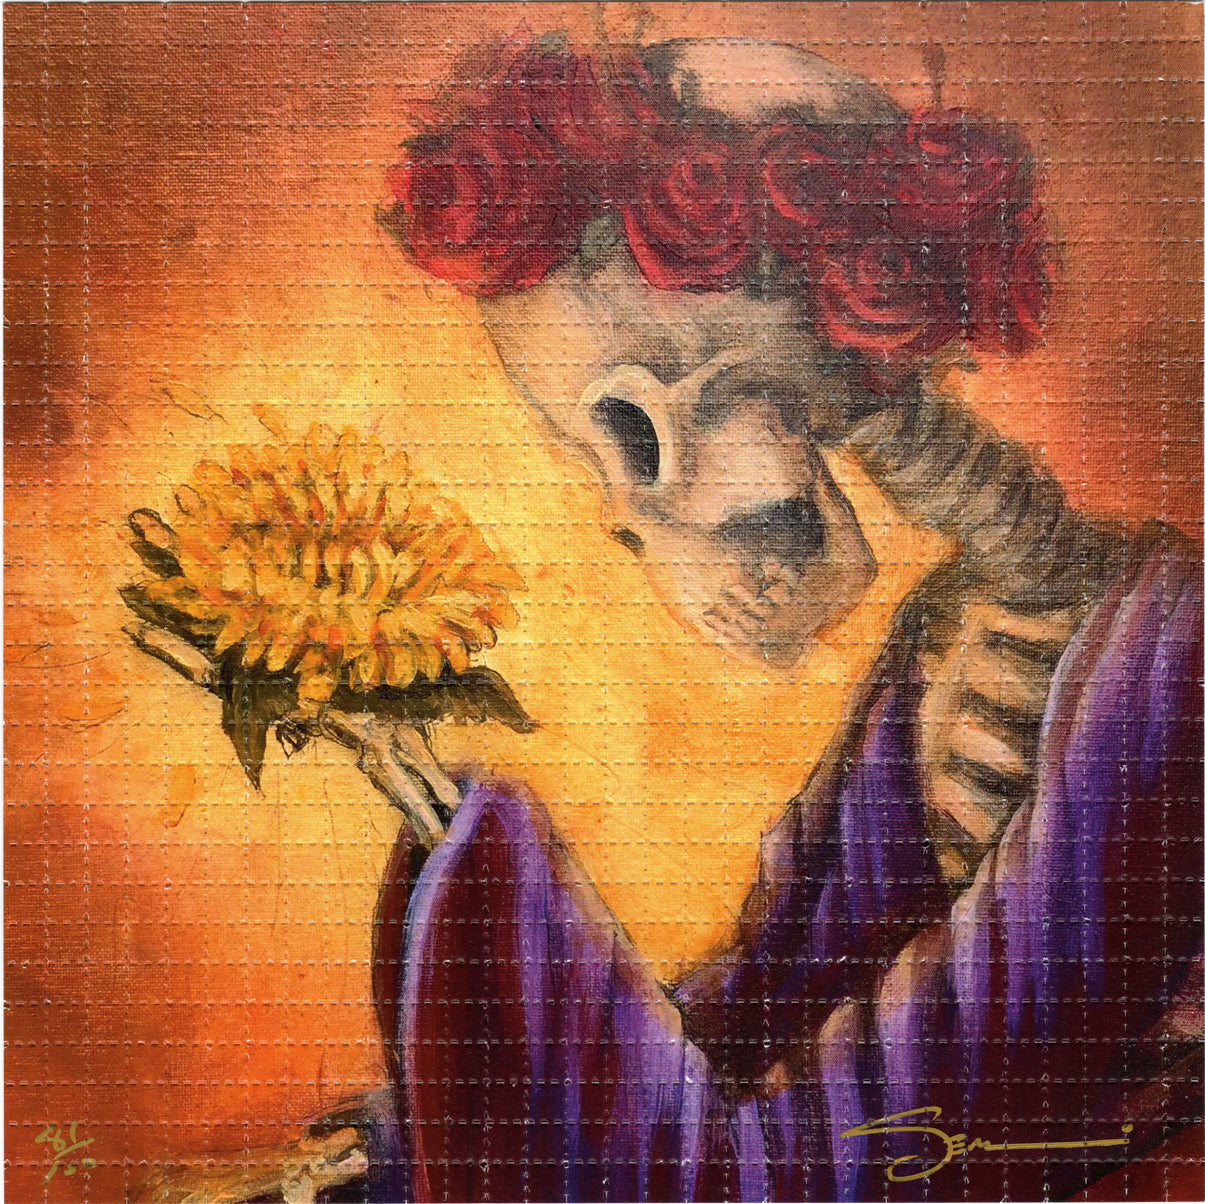 Bertha With Chrysanthemum by Mark Serlo Limited Edition LSD blotter art print